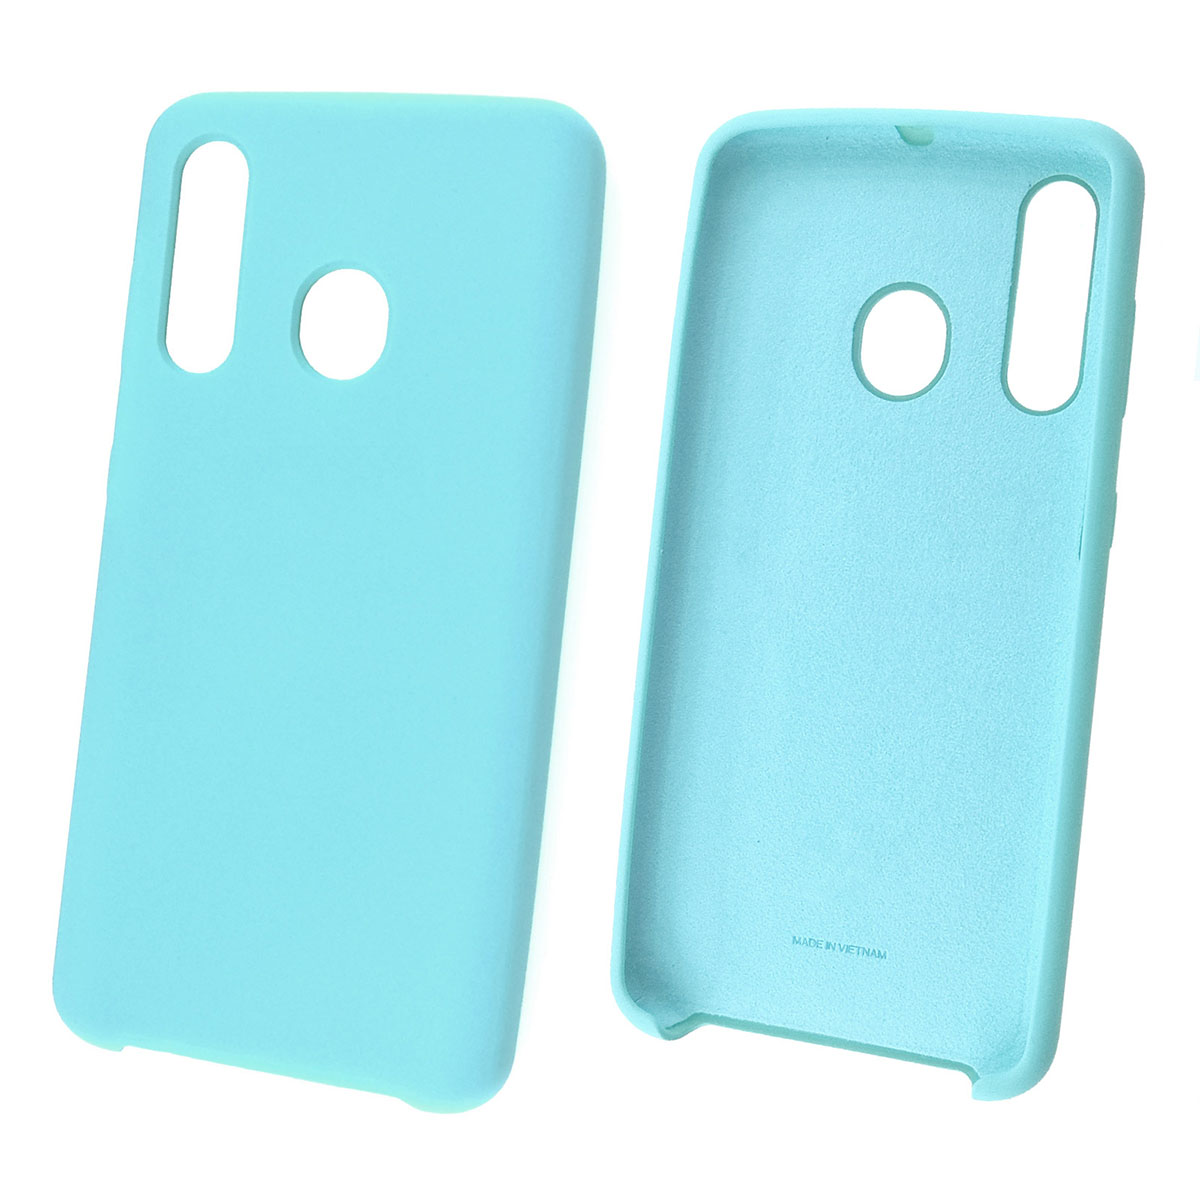 Чехол накладка Silicon Cover для SAMSUNG Galaxy A60 2019 (SM-A605), Galaxy M40 (SM-M405), силикон, бархат, цвет бирюзовый.